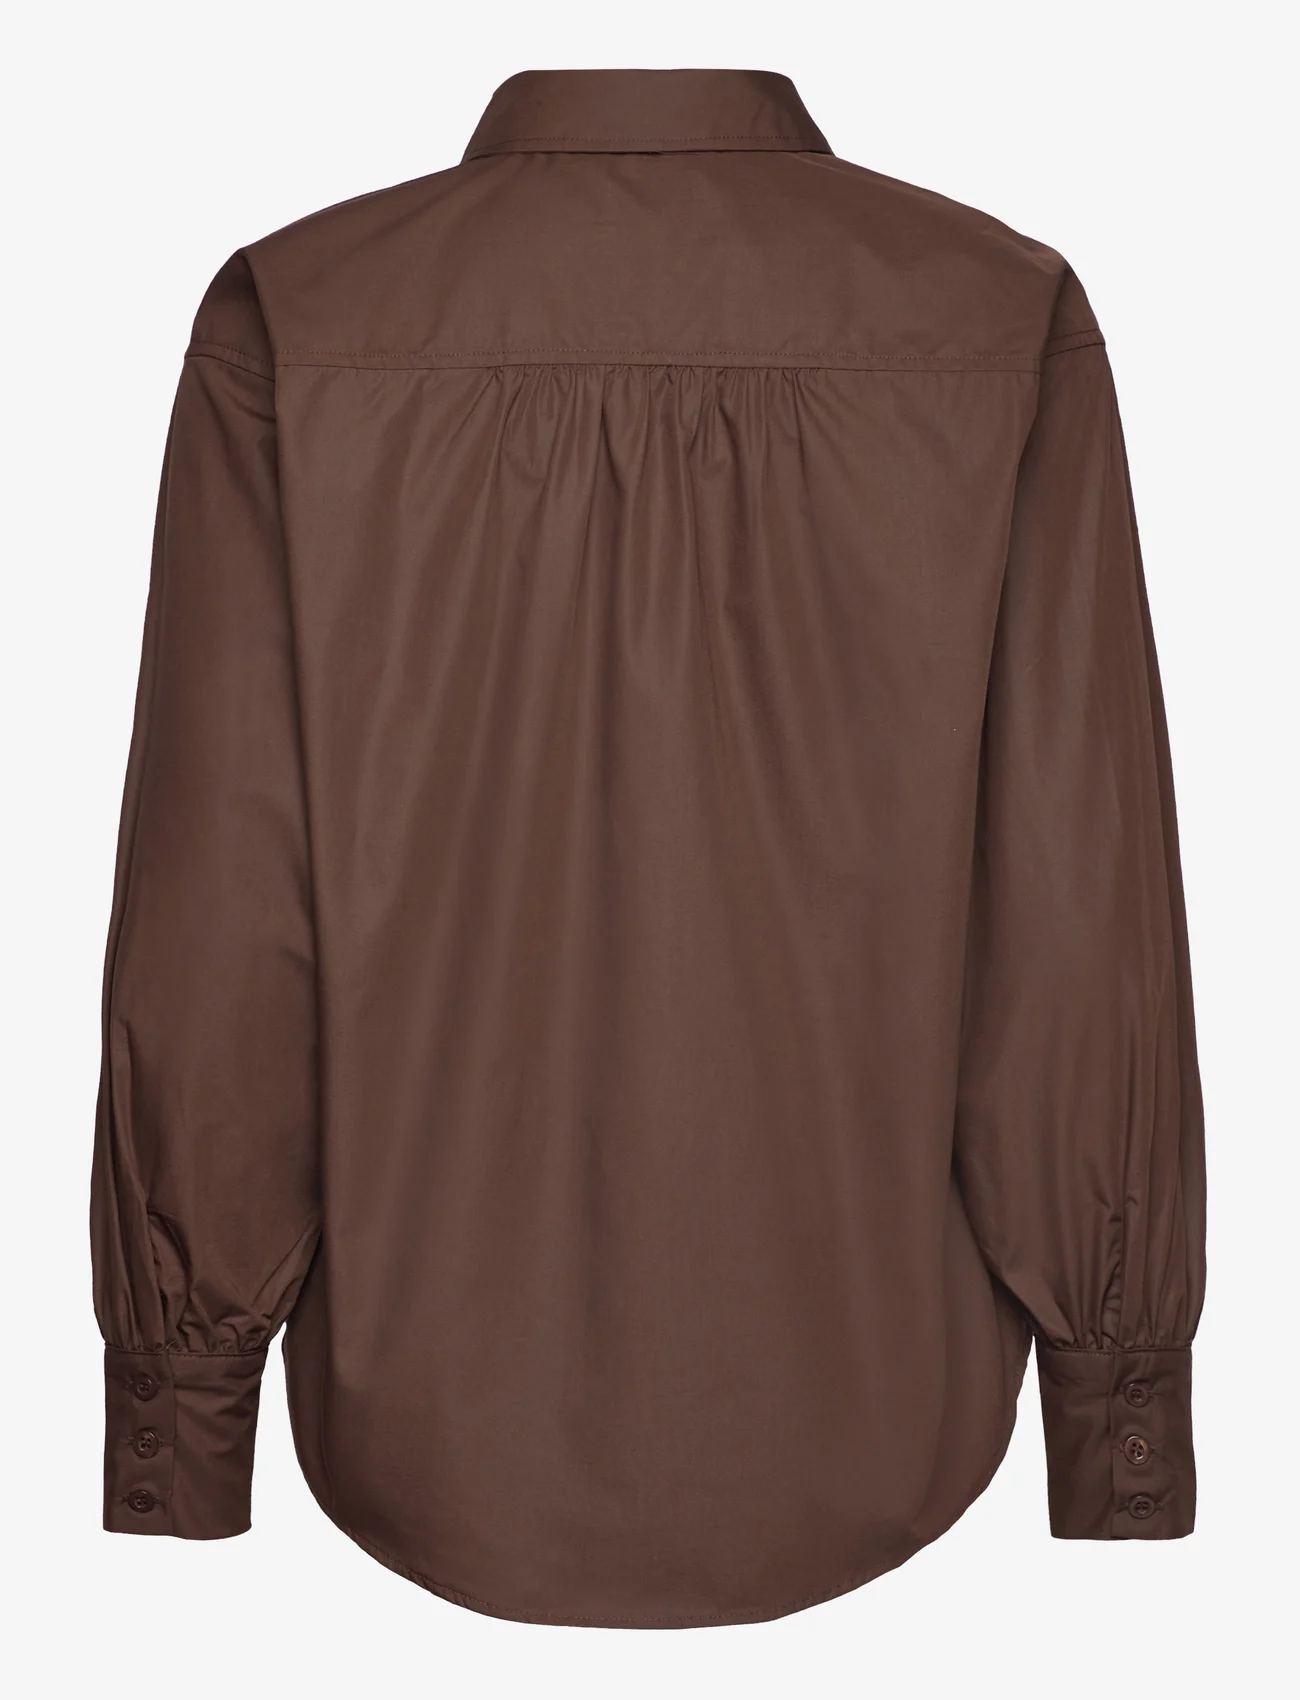 Rosemunde - RWSEbony shirt w/ruffles - long-sleeved shirts - chestnut - 1